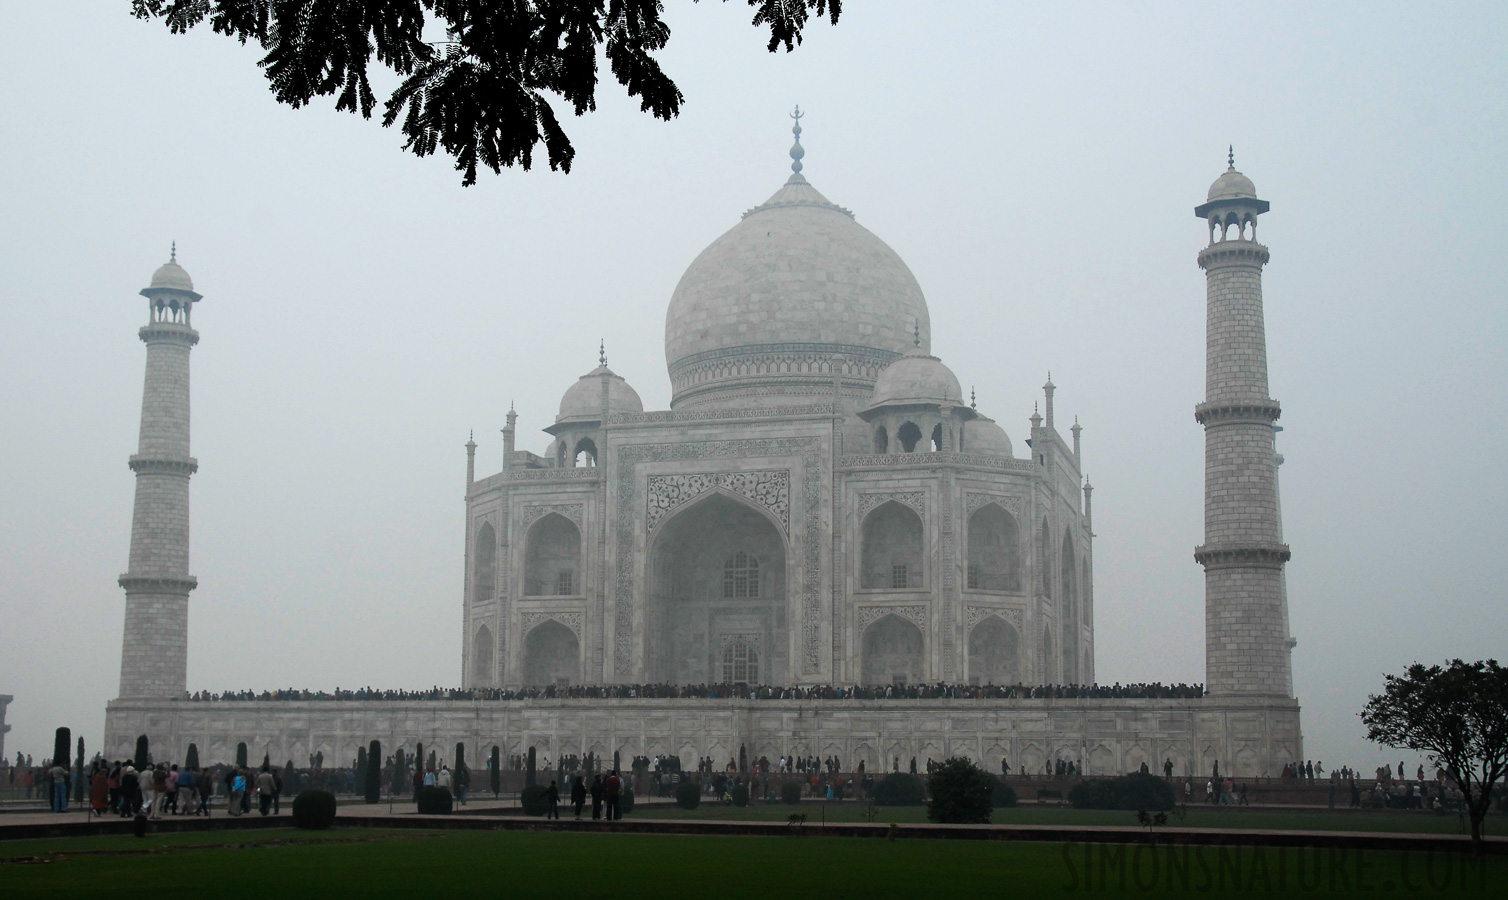 Taj Mahal [27 mm, 1/80 sec at f / 7.1, ISO 400]